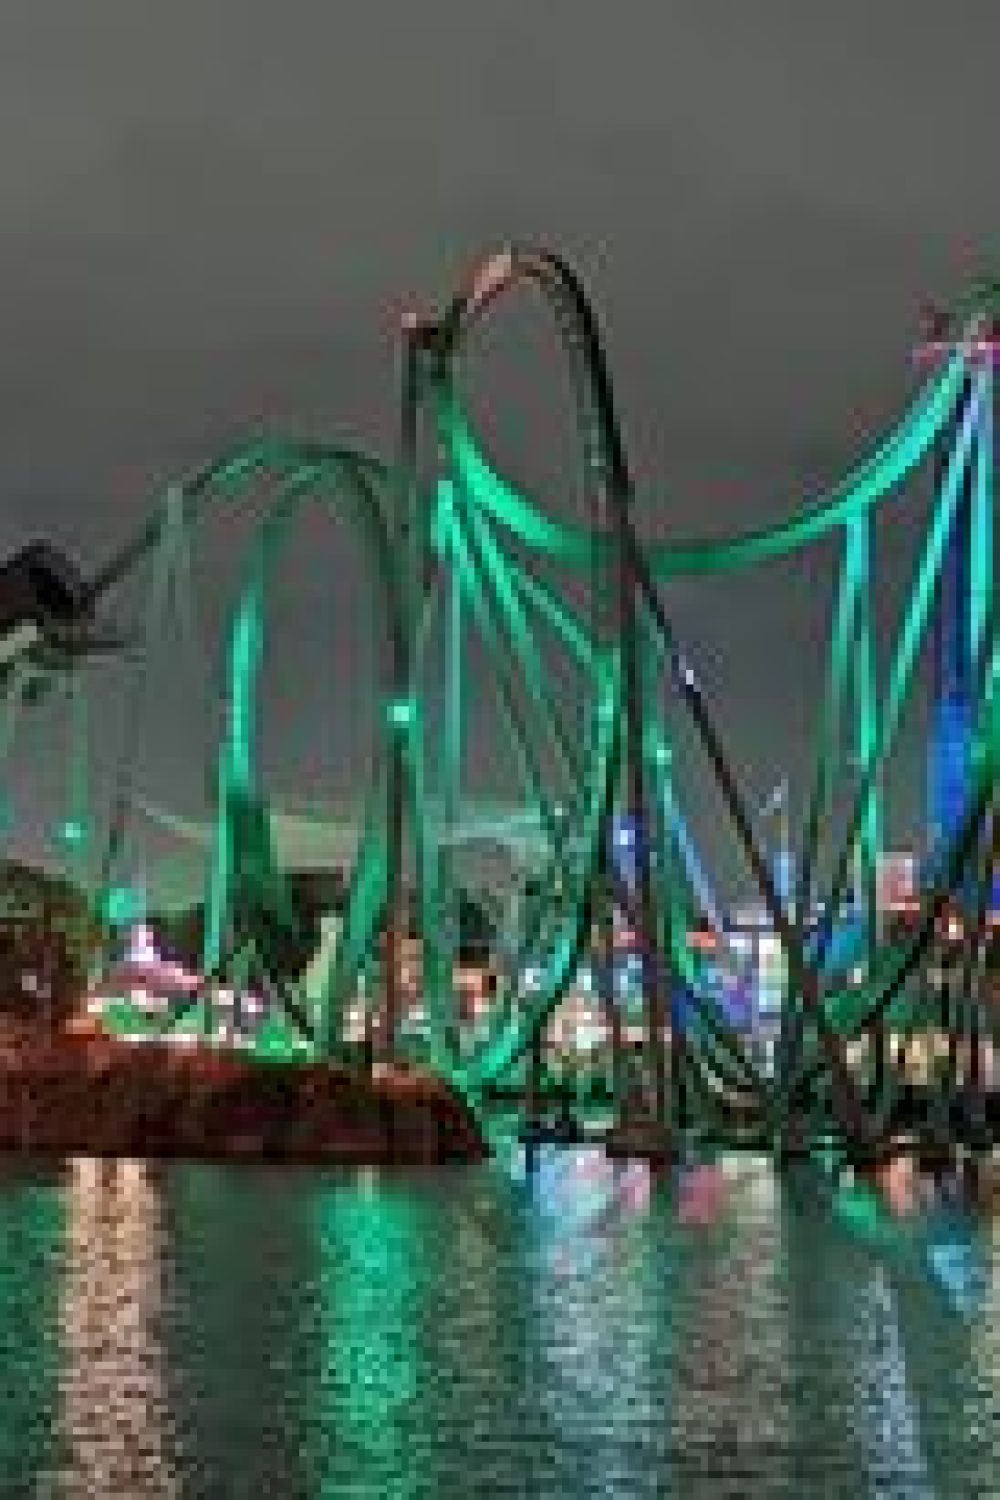 The Hulk roller coaster in Universal Studios, Florida